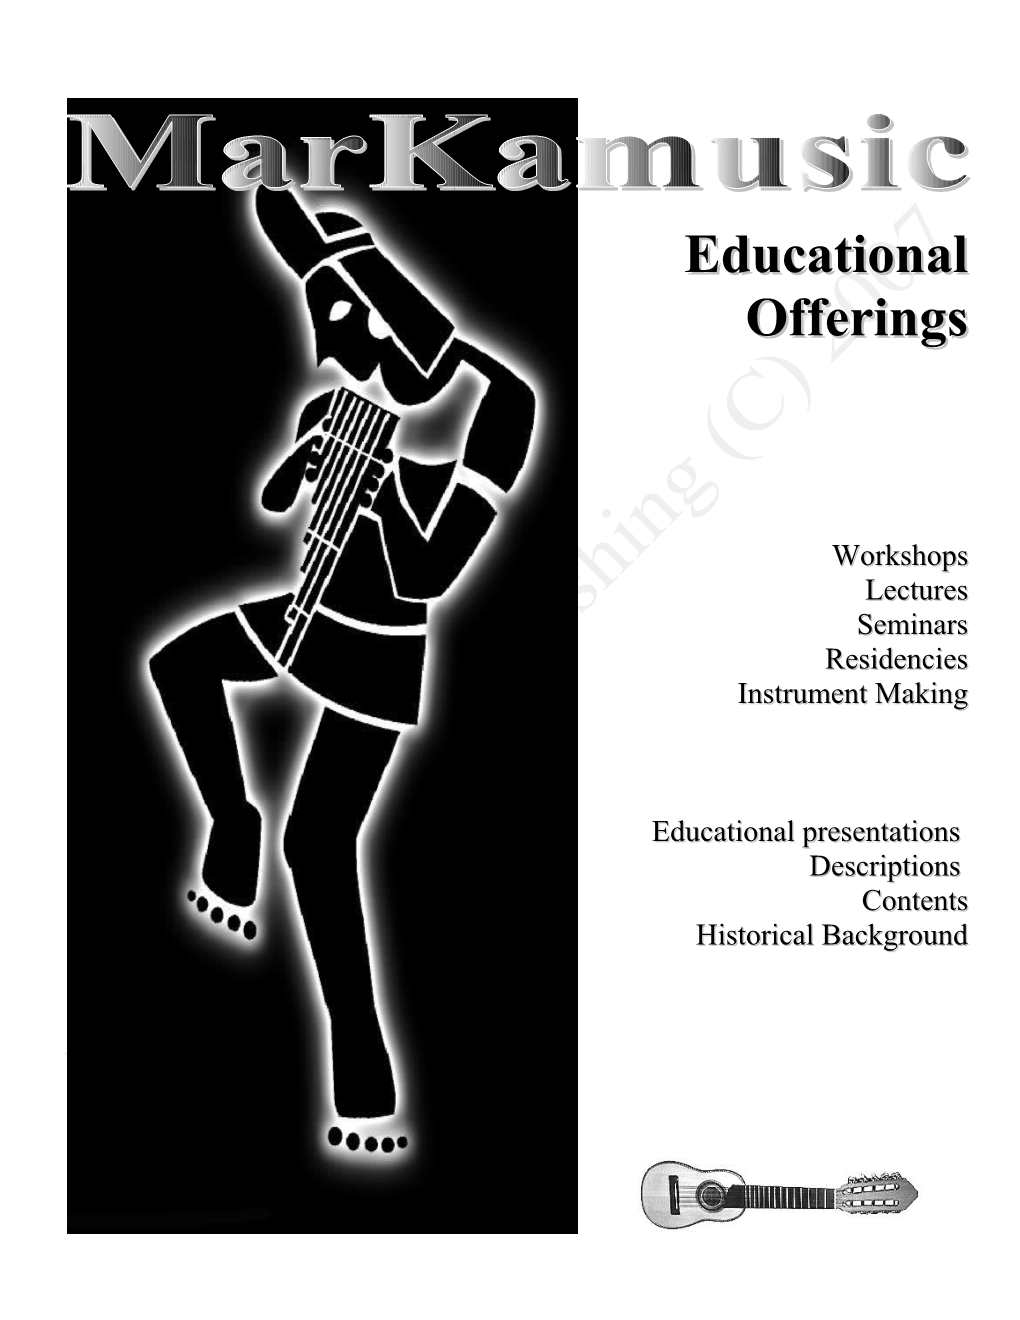 Markamusic Educational Offerings